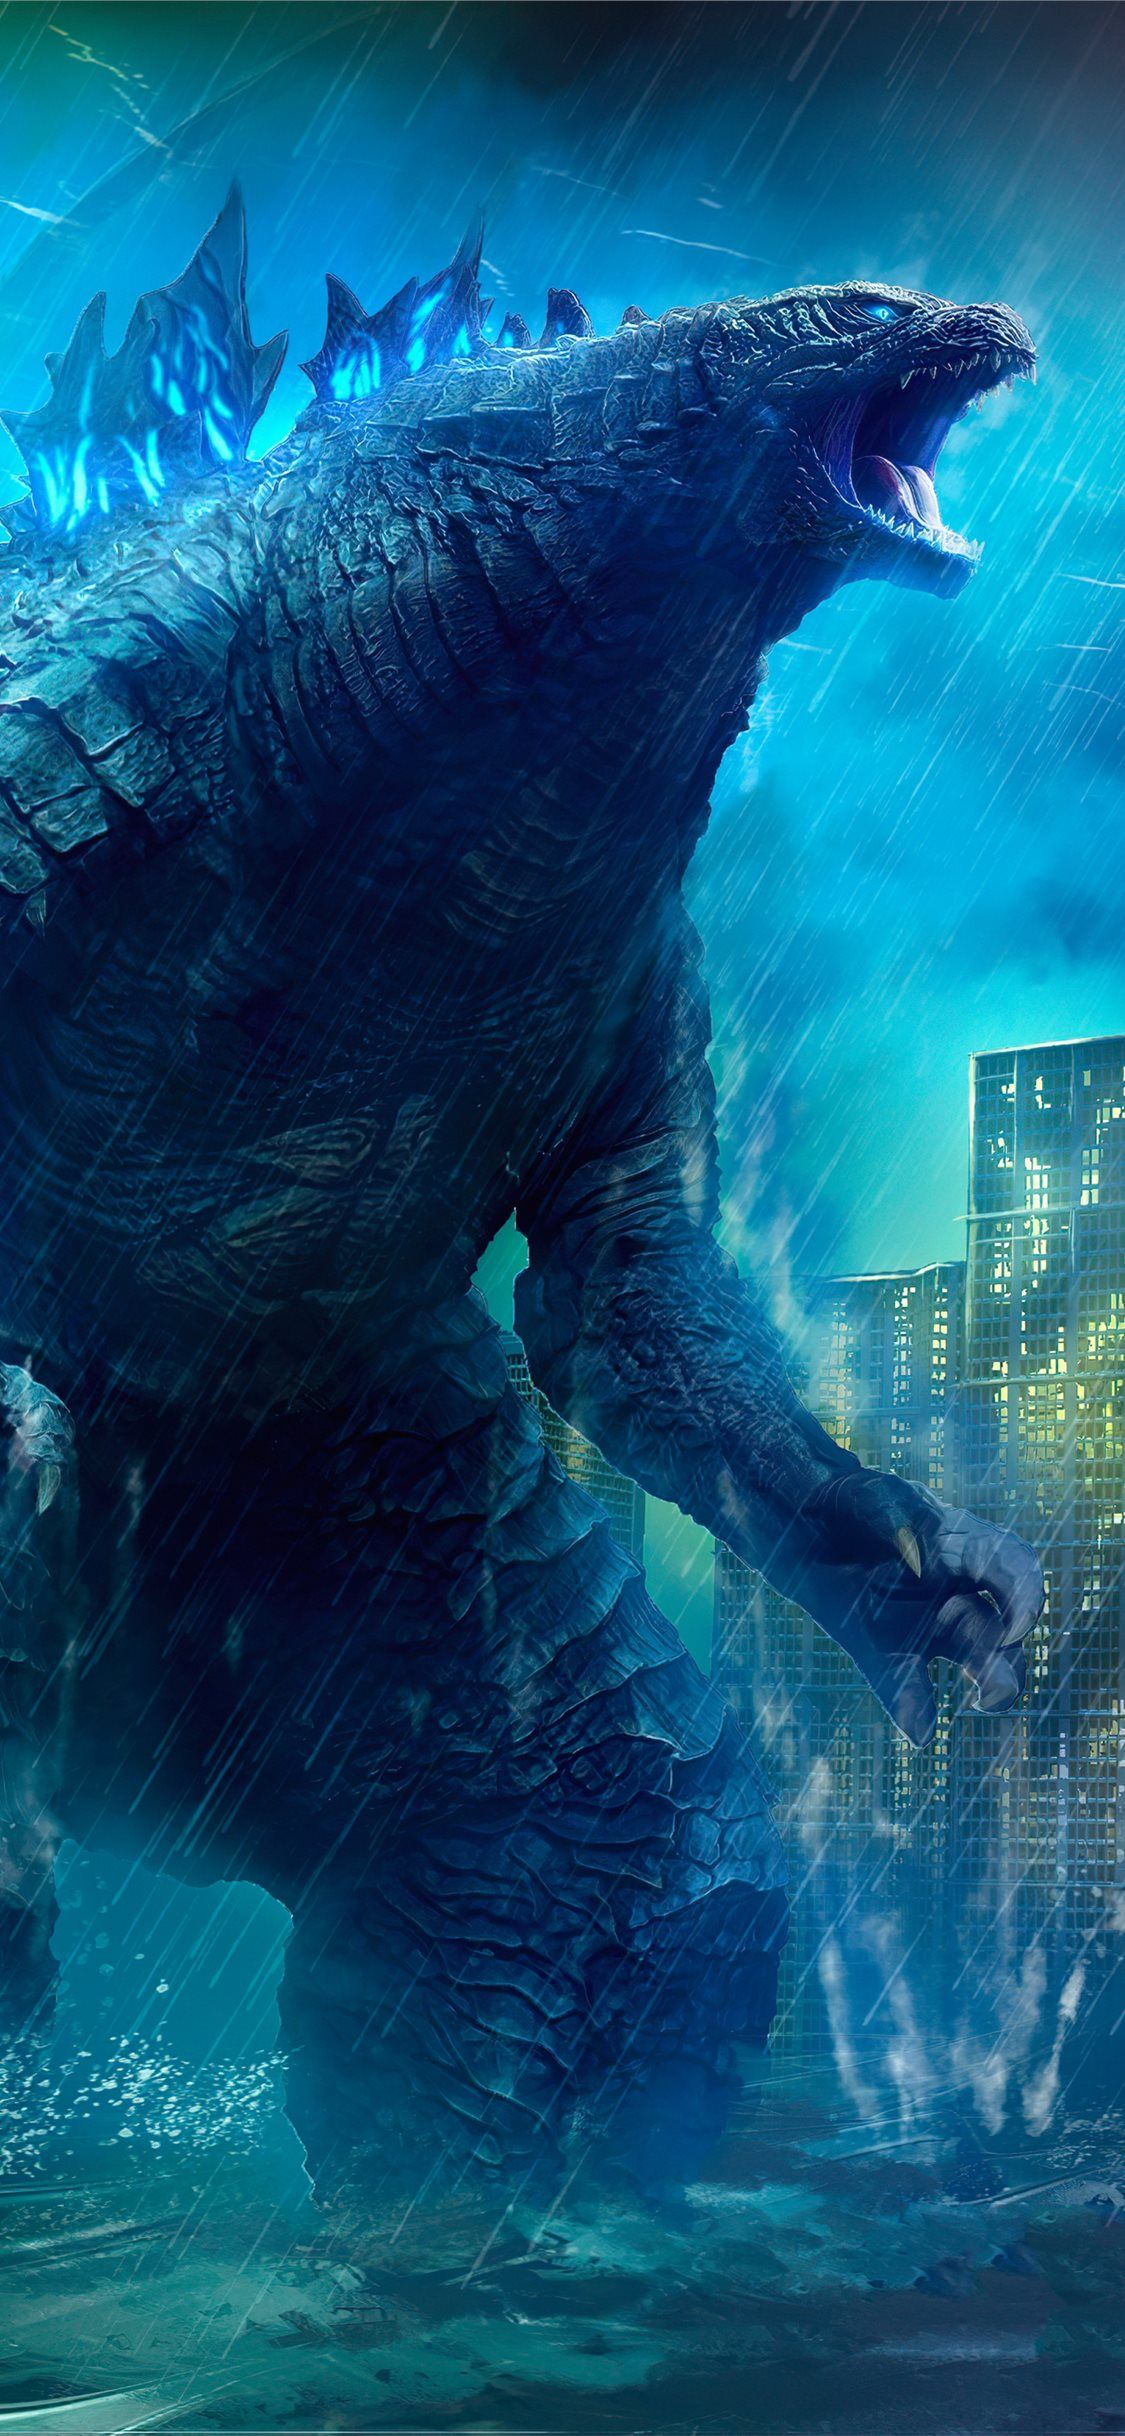 Godzilla vs. Kong mobile wallpaper - HD Mobile Walls